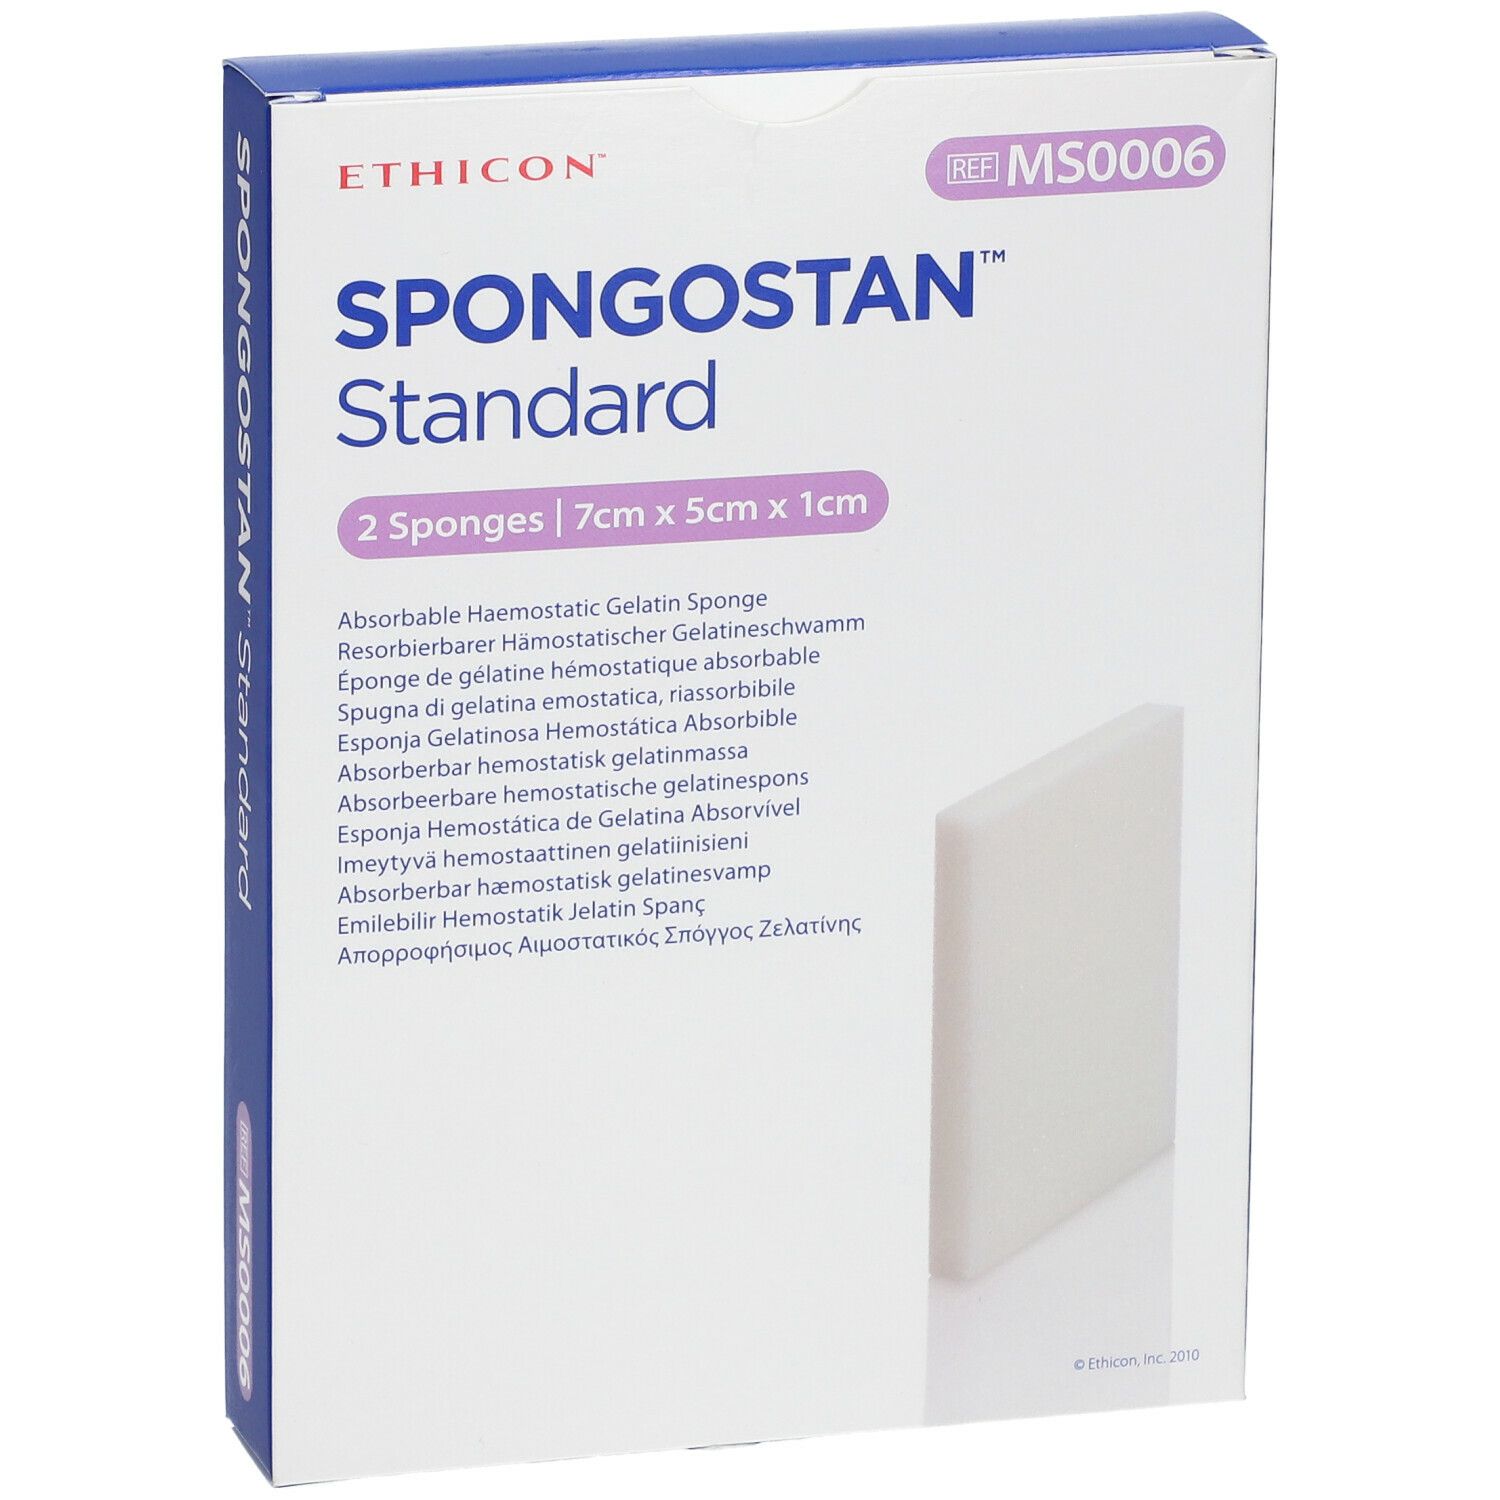 ETHICON™ SPONGOSTAN™ Standard